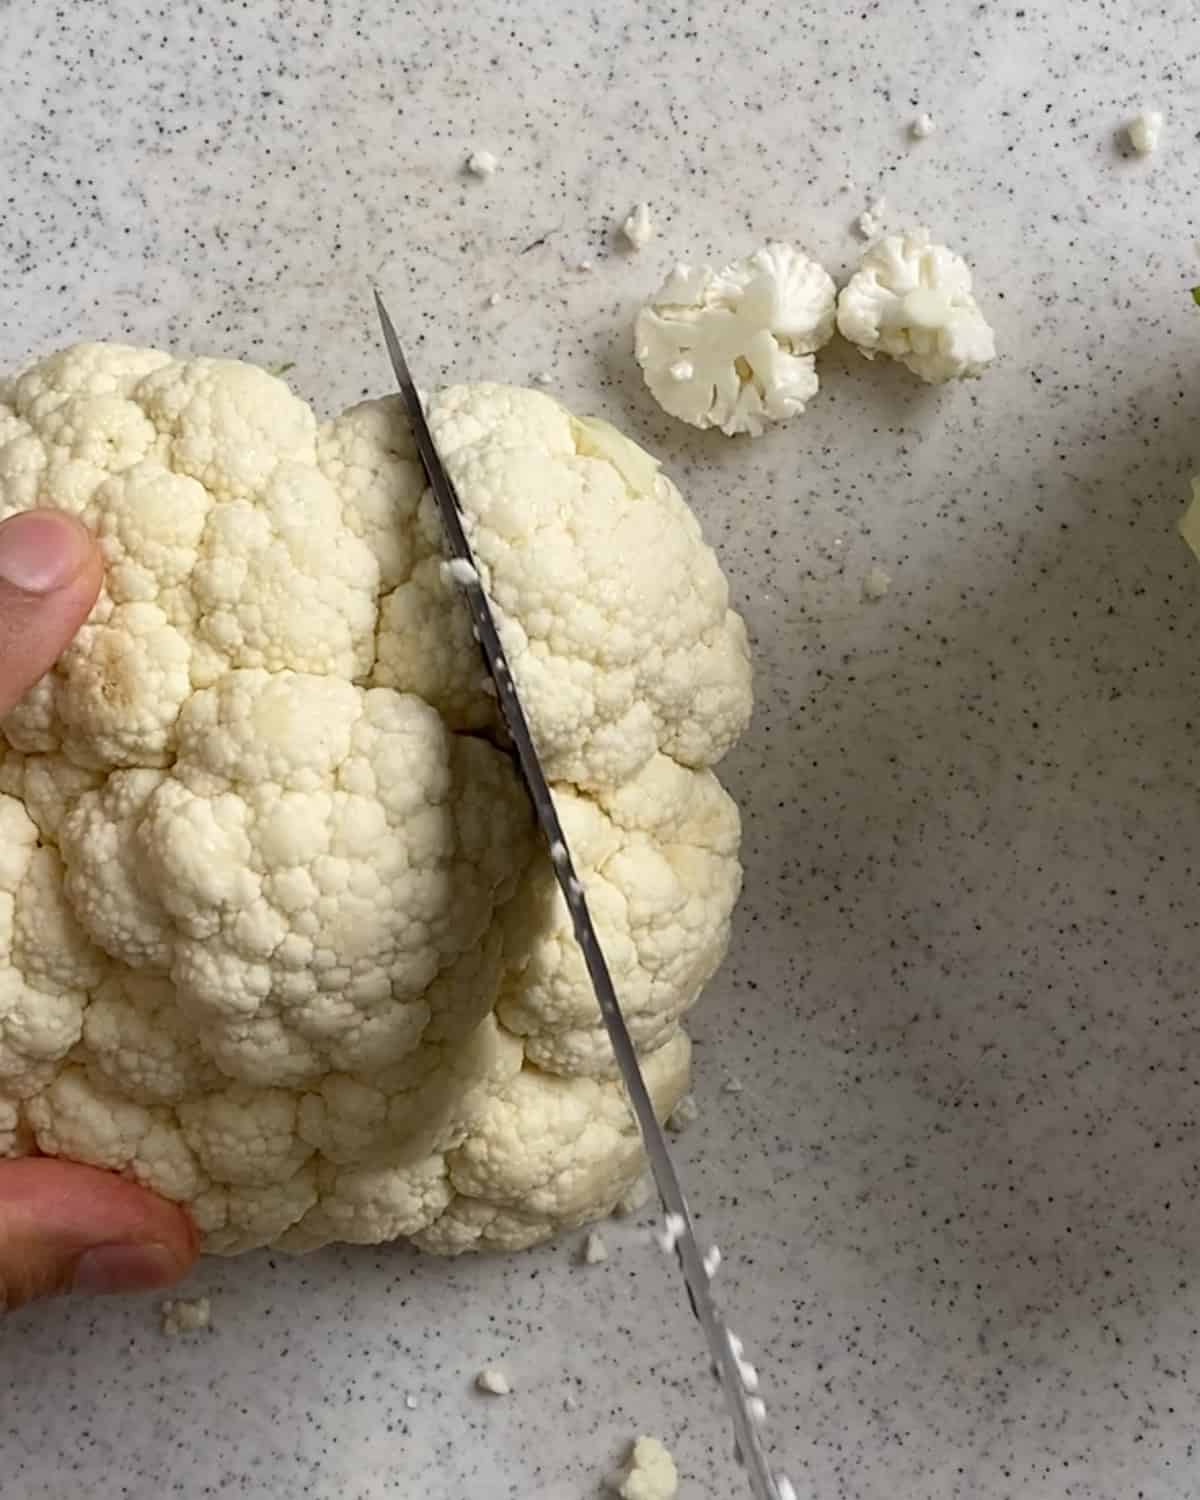 process shot of cutting cauliflower against a light surface